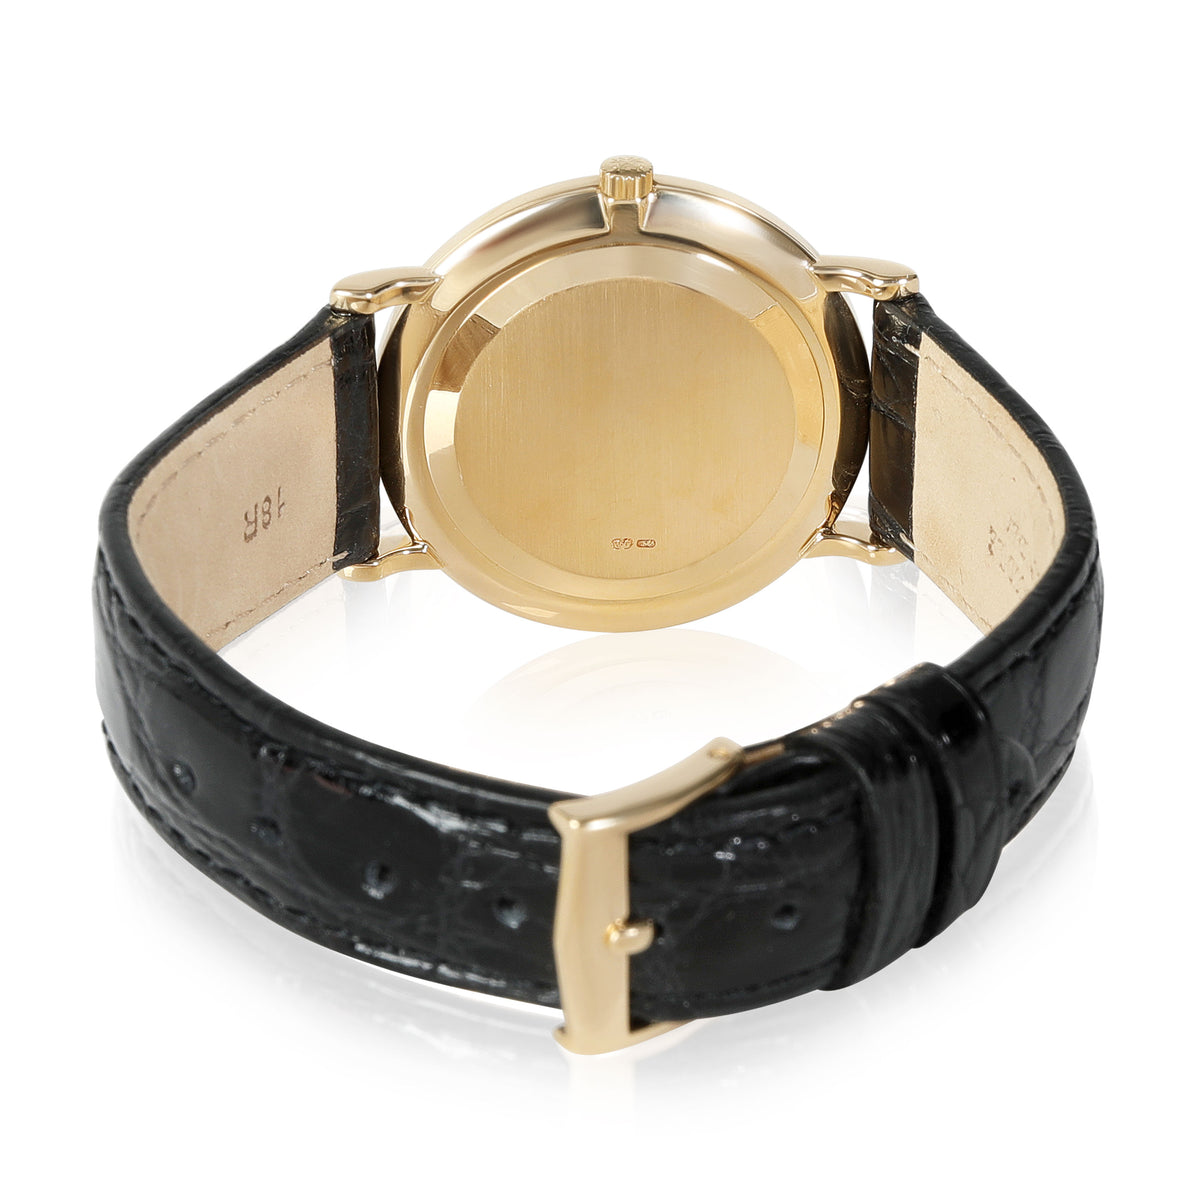 Patek Philippe Calatrava 3919J Men's Watch in 18kt Yellow Gold